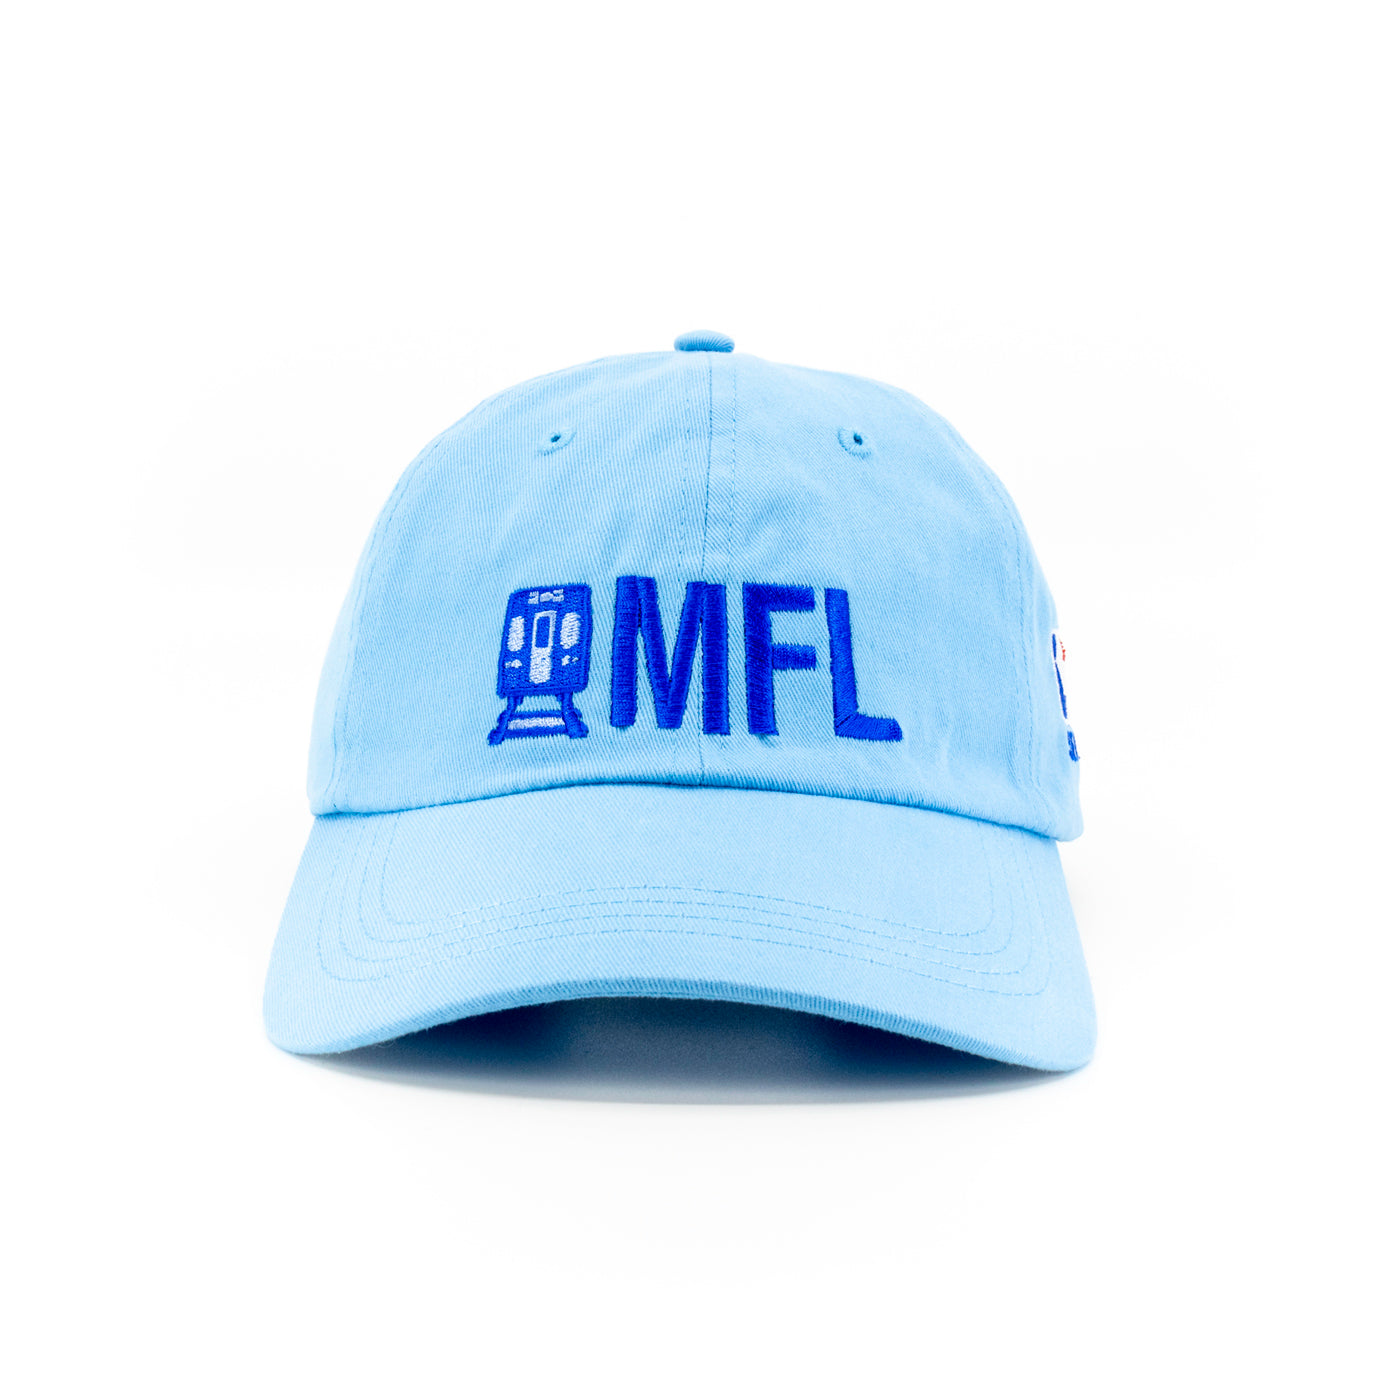 SEPTA Market-Frankford Line (MFL) Hat